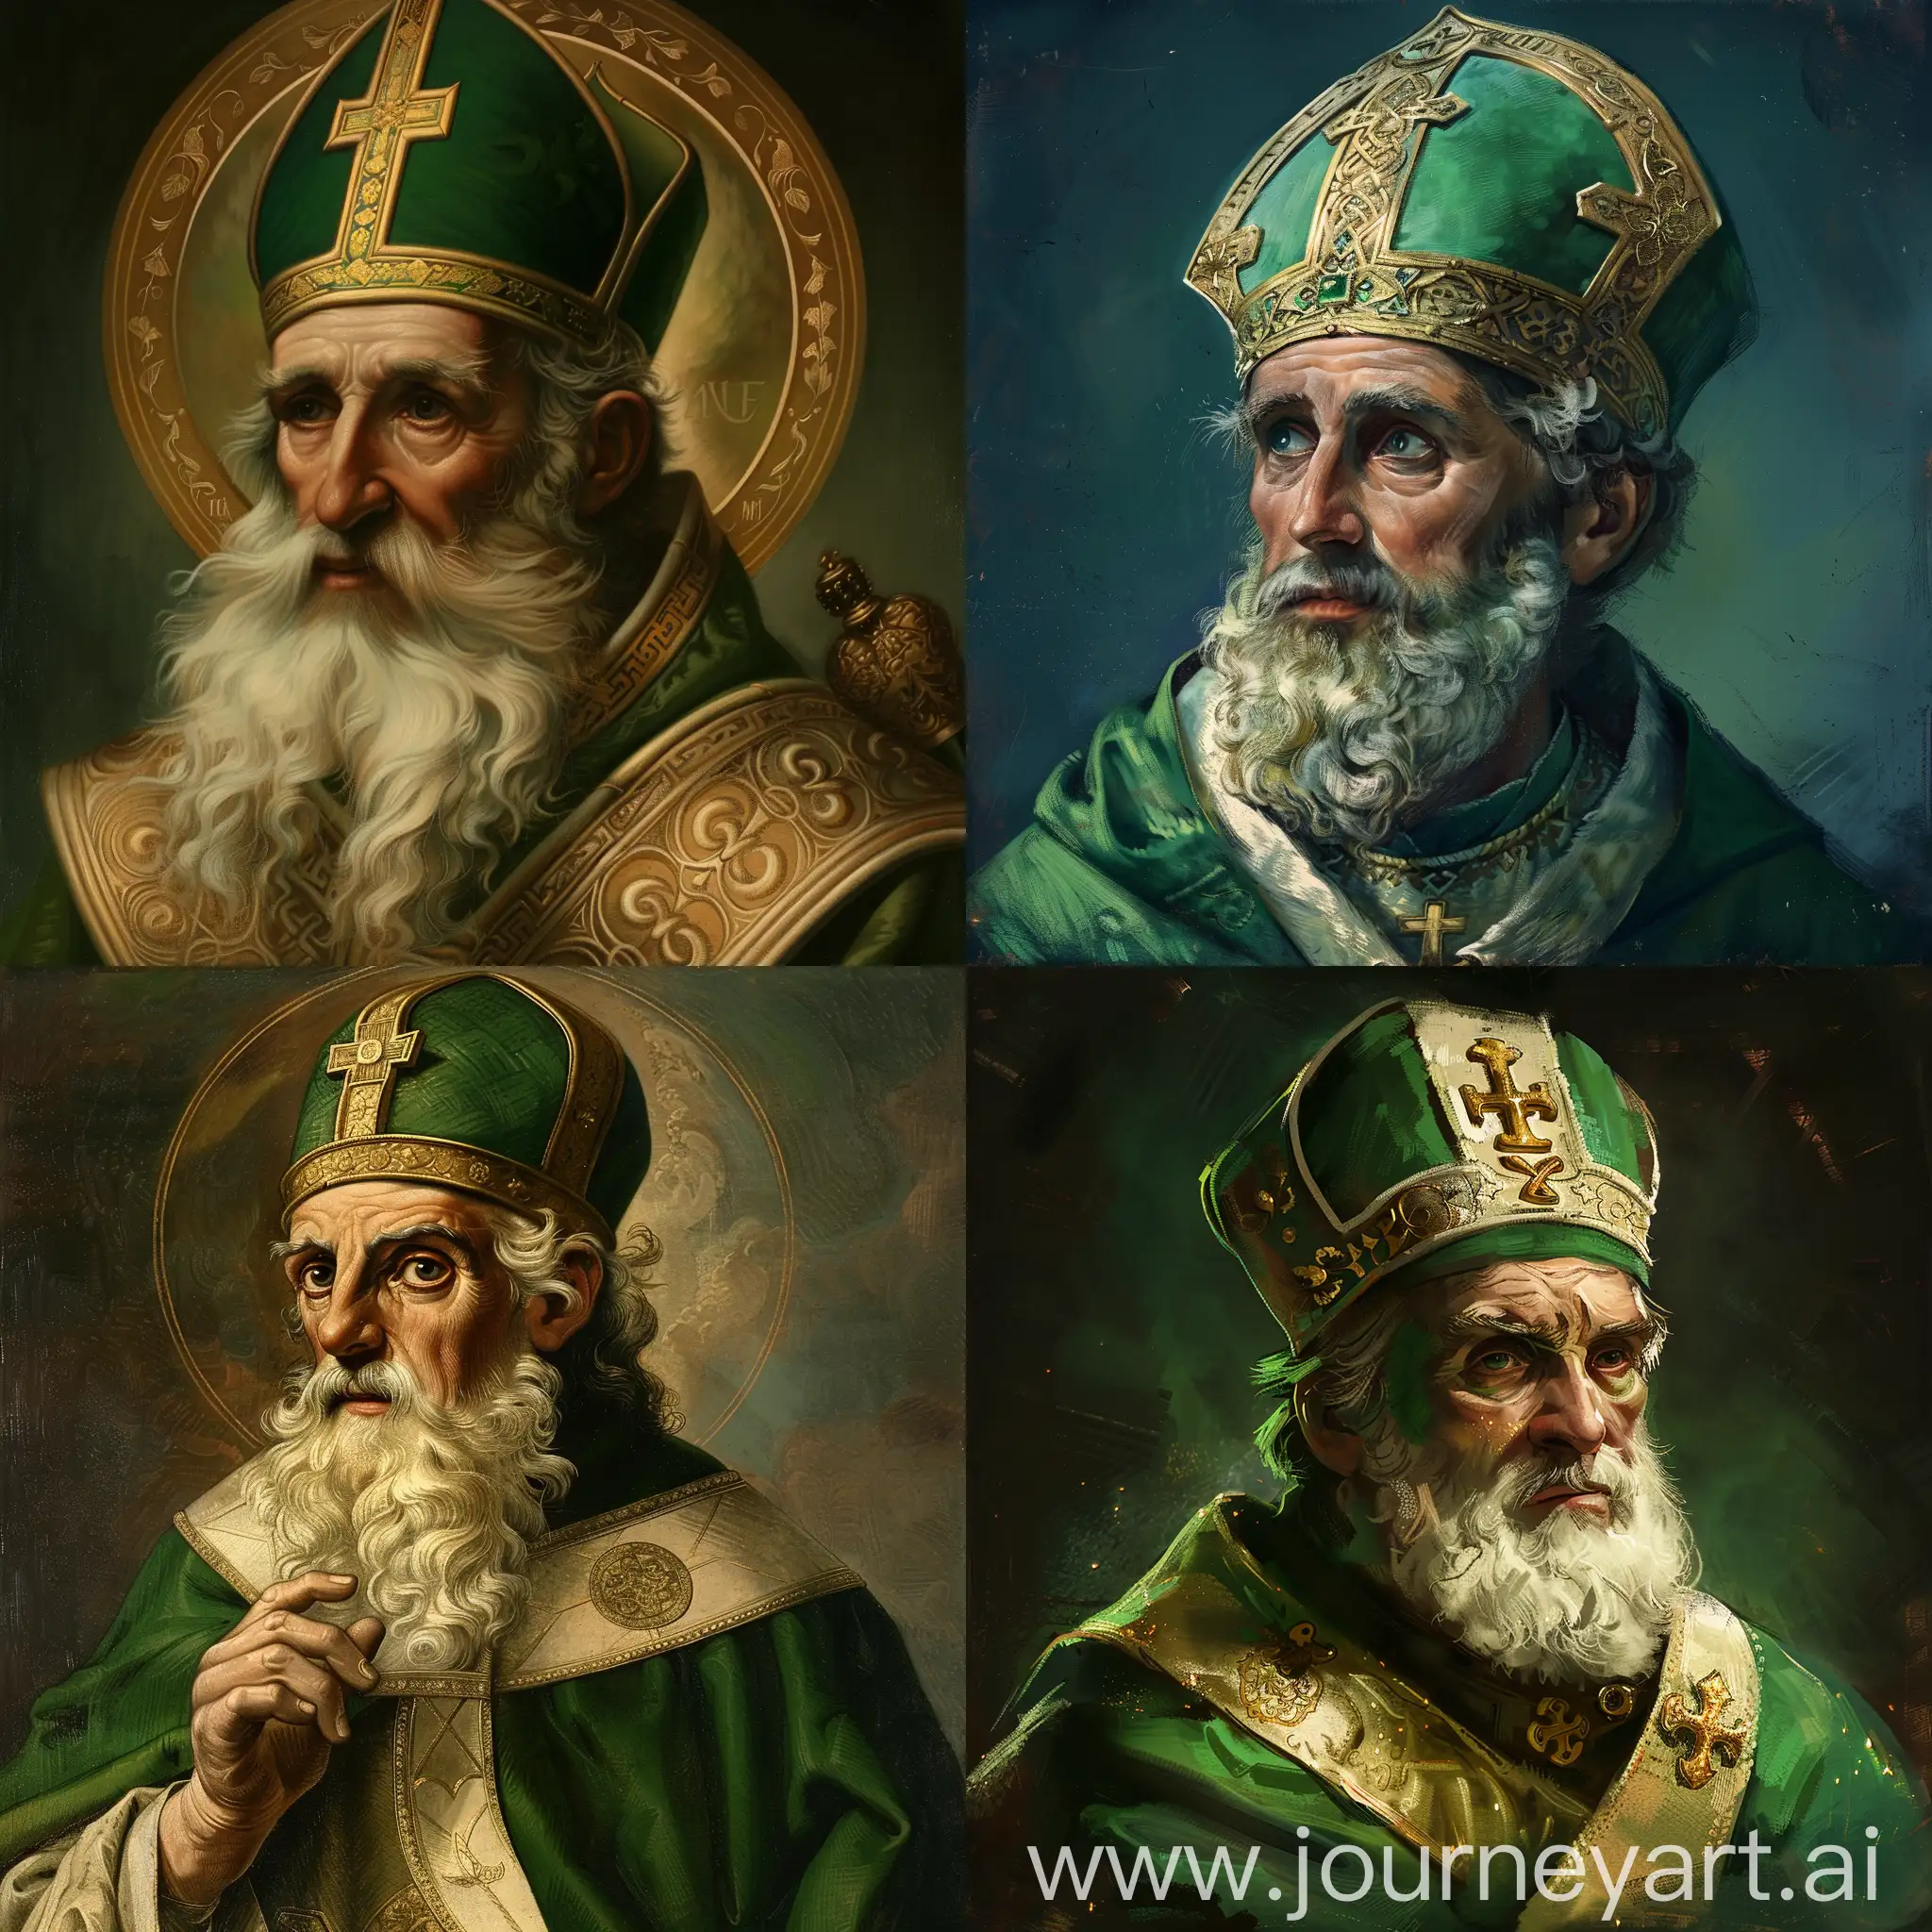 Saint-Patrick-of-Ireland-in-Traditional-Attire-Portrait